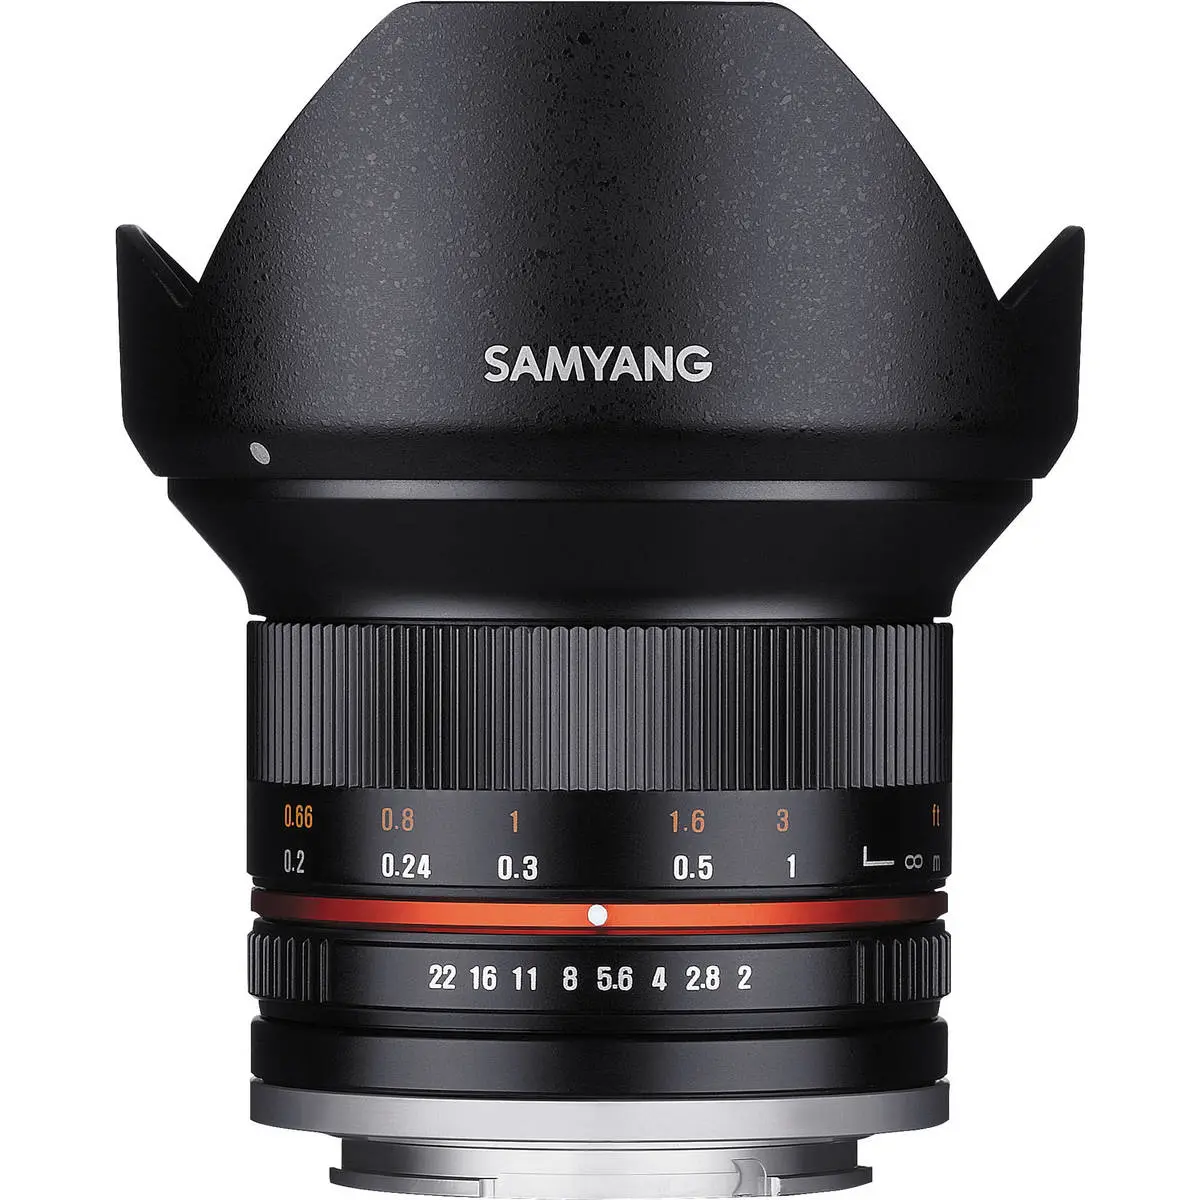 2. Samyang 12mm f/2.0 NCS CS Black (M4/3) Lens